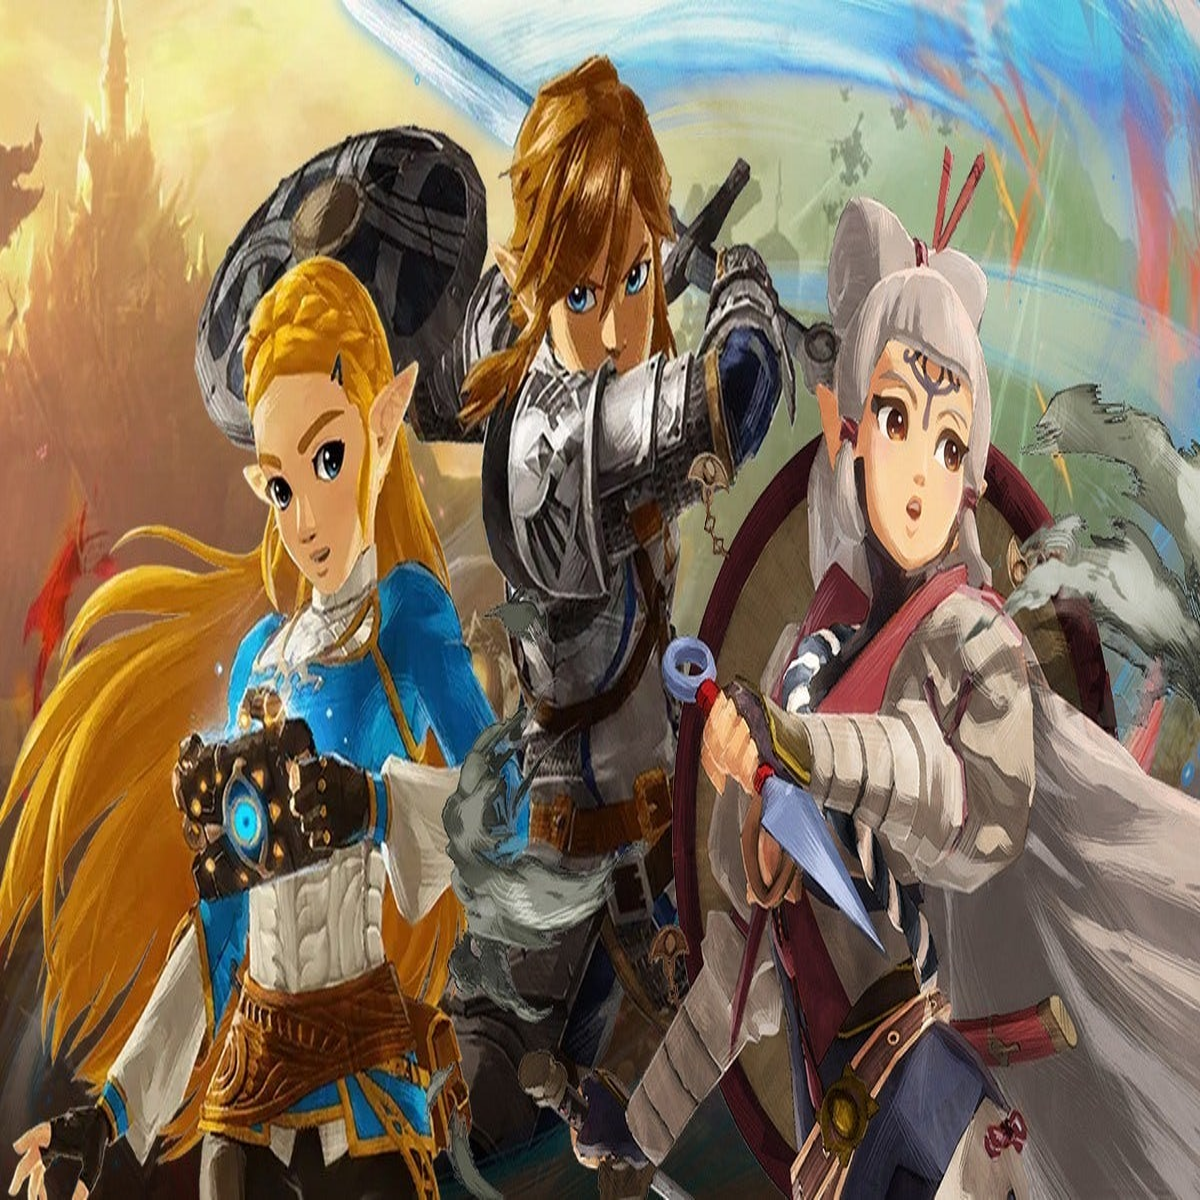 Hyrule Warriors: Legends (3DS): Koei Tecmo Games - Tokyo Otaku Mode (TOM)